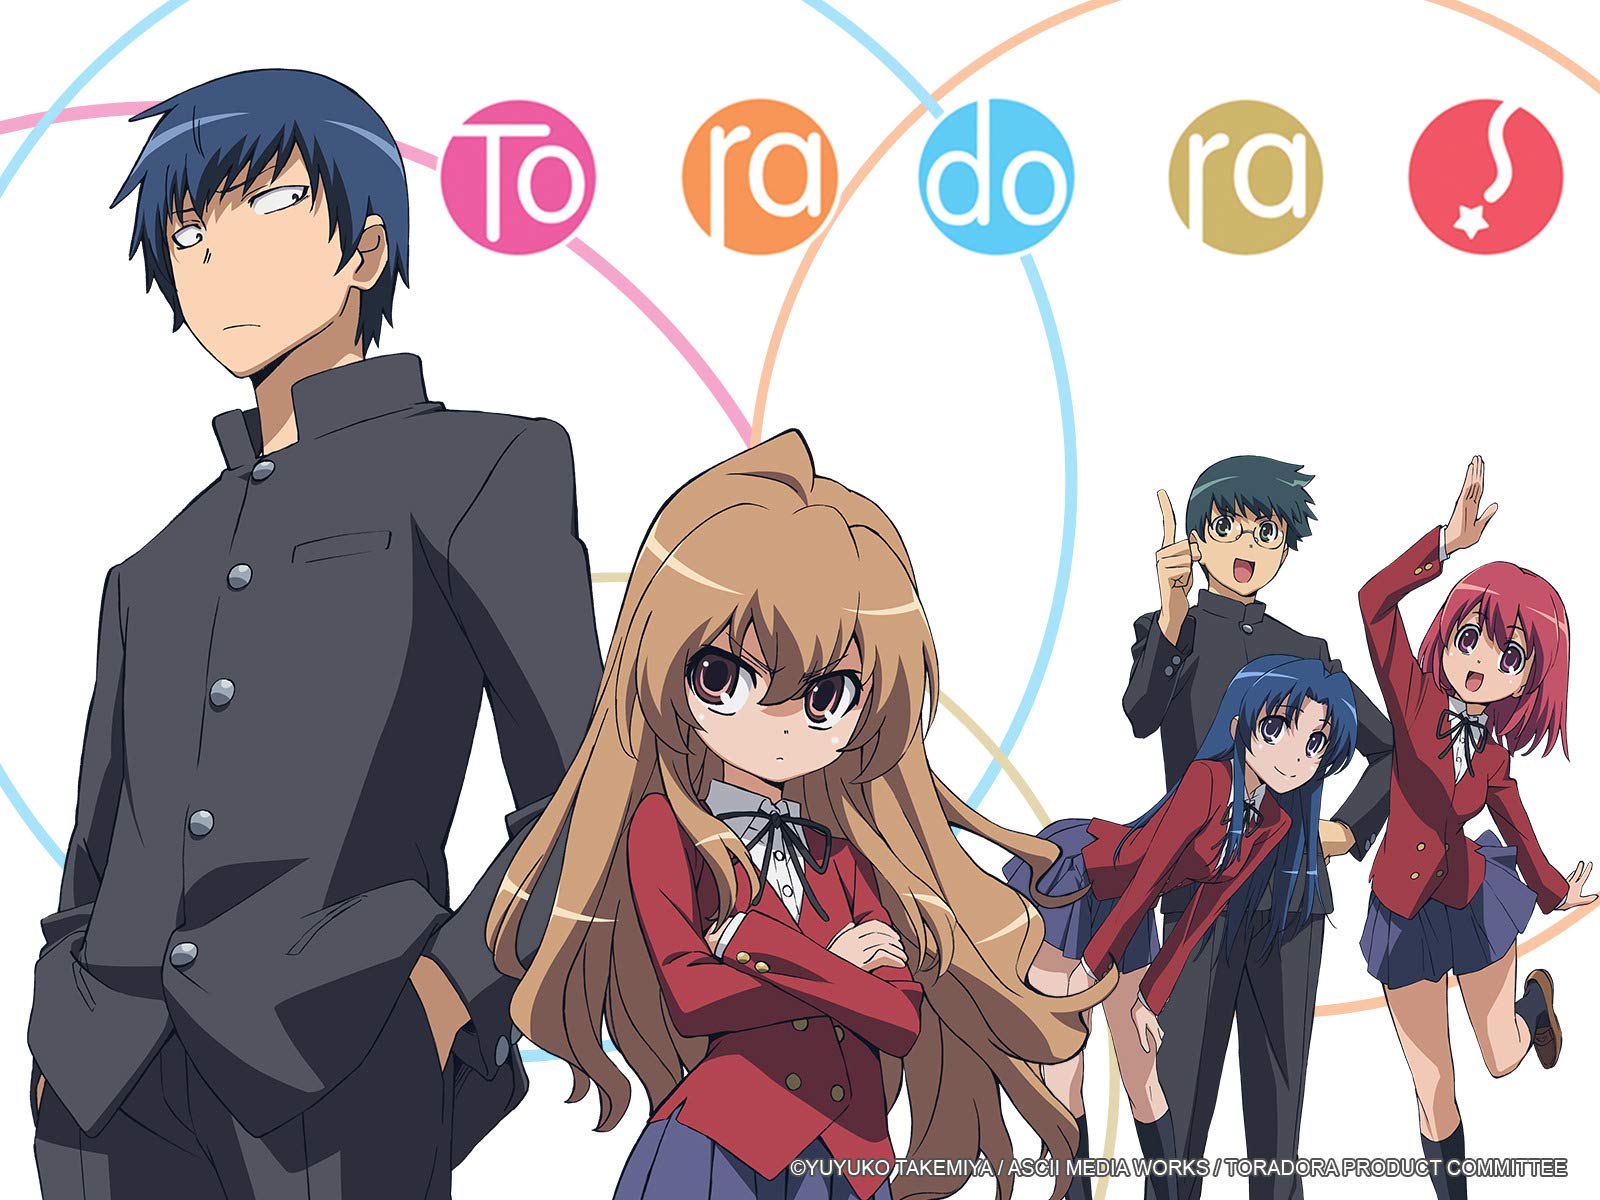 10. "Toradora!" manga series - wide 6